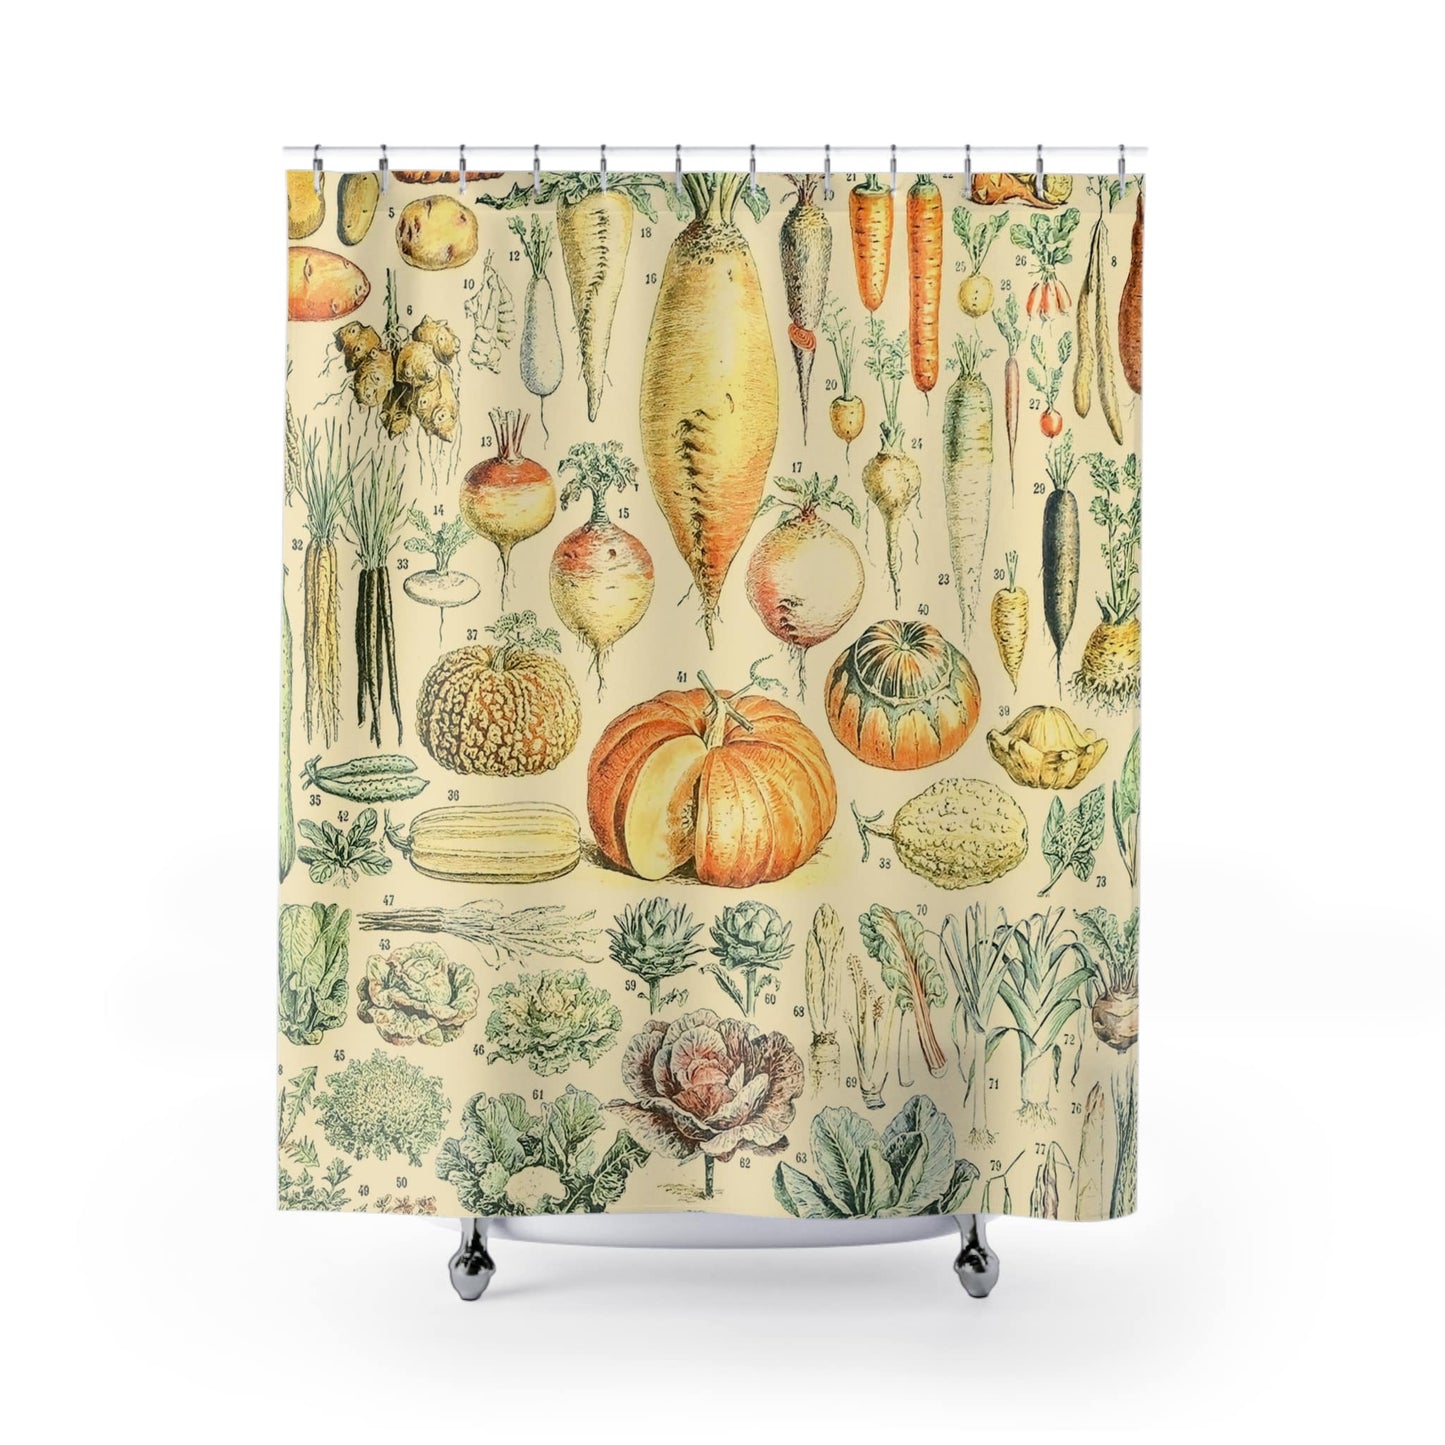 Vegetables Shower Curtain with garden variety design, botanical bathroom decor featuring various vegetable illustrations.